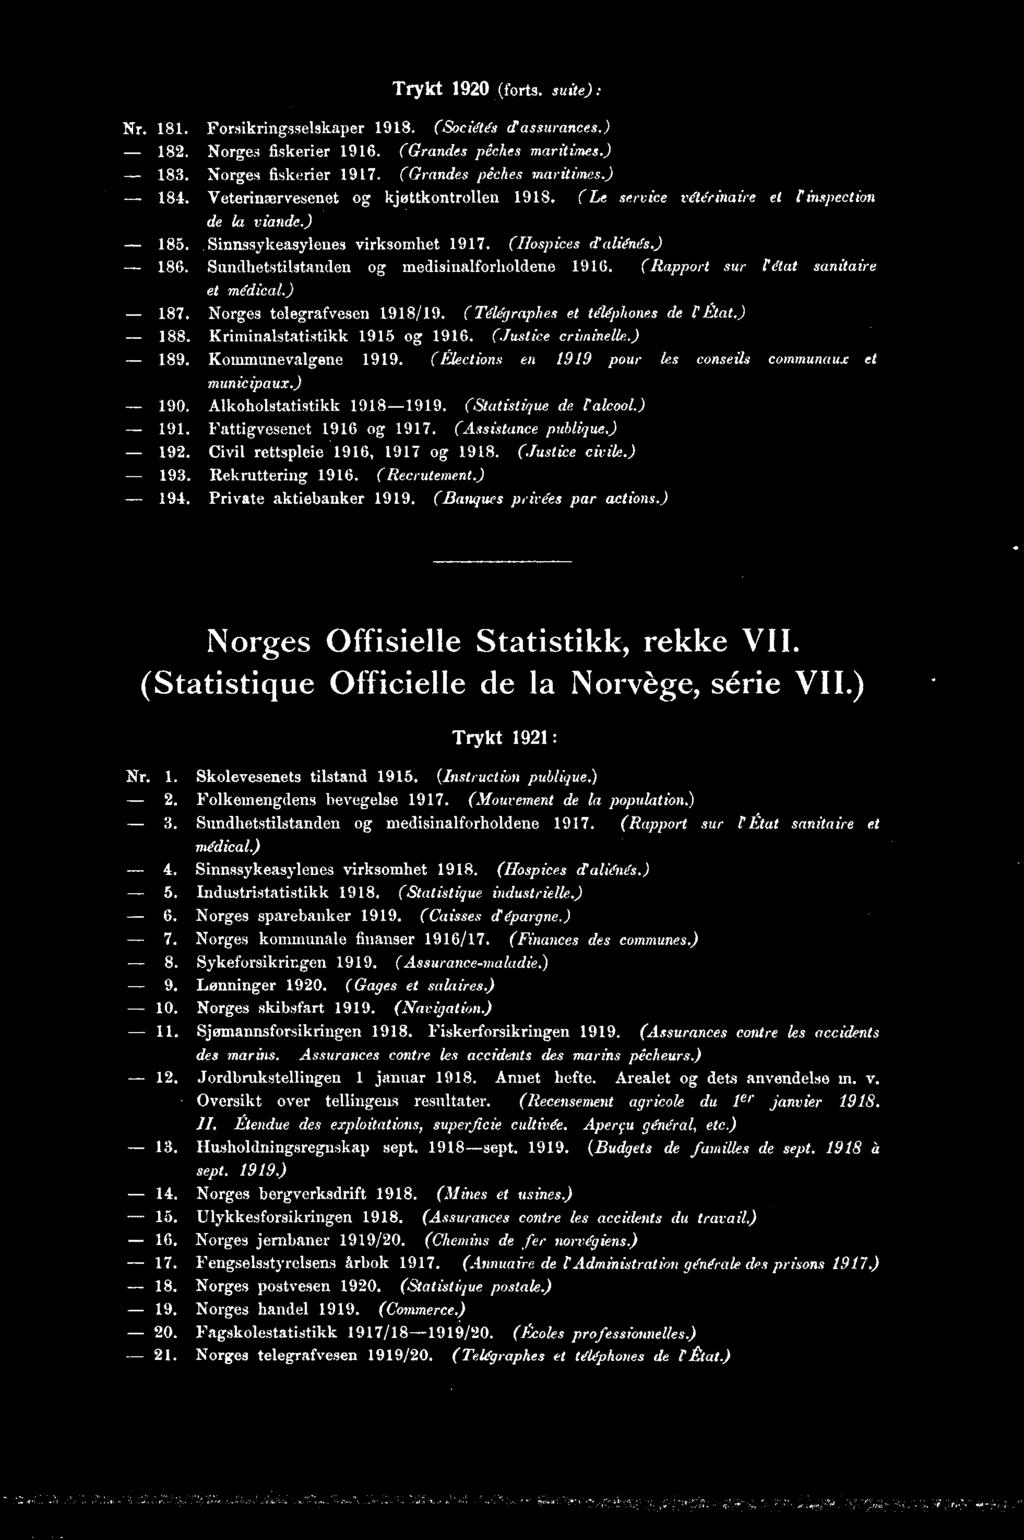 (Justice civile.) 9. Rekruttering 9. ( Recrutement.) 9. Private aktiebanker 99. (Banques privées par actions.) Norges Offisielle Statistikk, rekke VII.